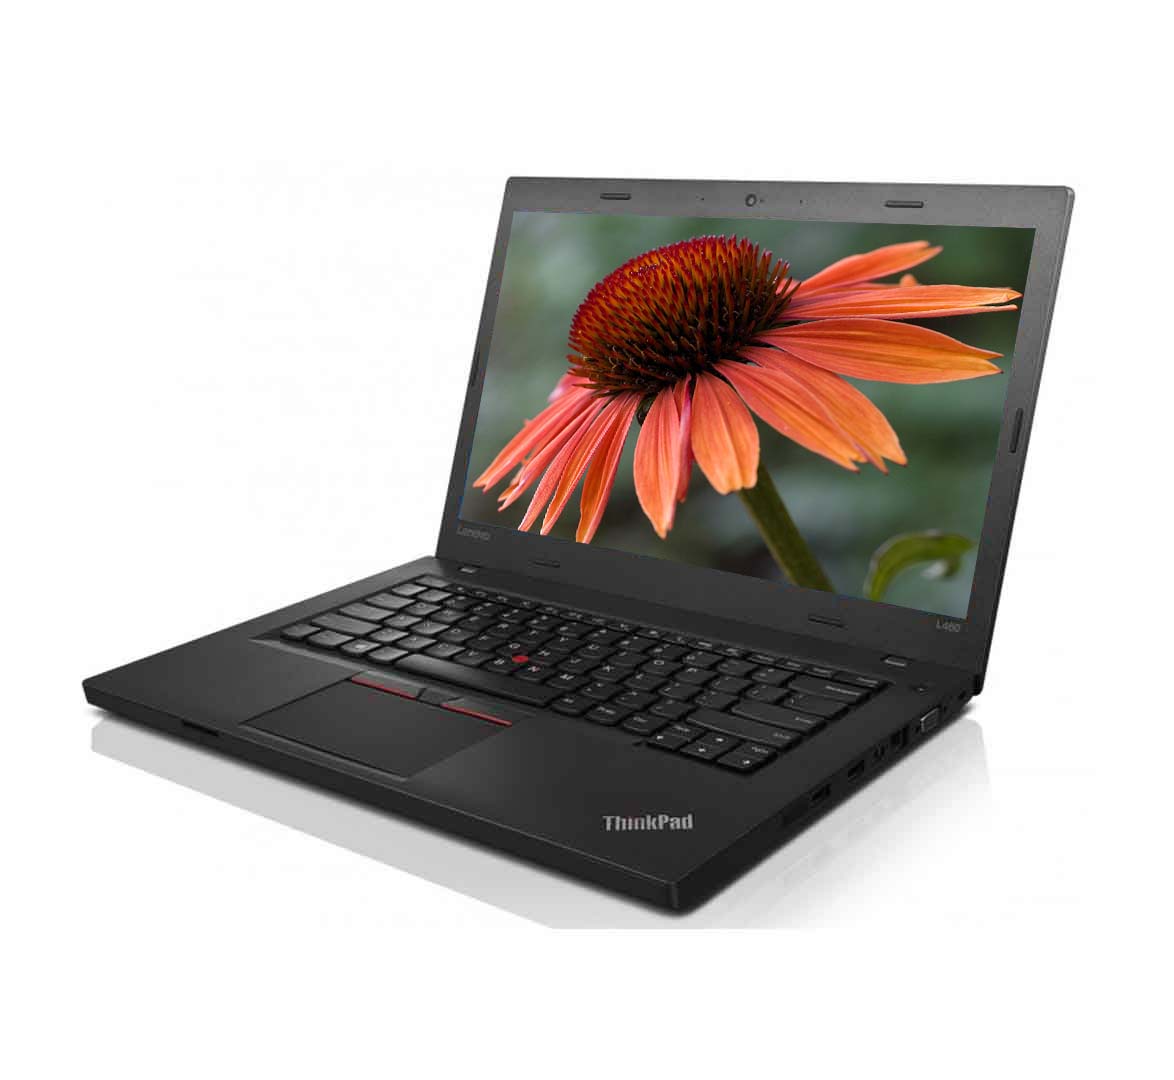 Lenovo ThinkPad L460 Business Laptop, Intel Core i5-6th Generation CPU, 8GB RAM, 256GB SSD, 14 inch Display, Windows 10 Pro